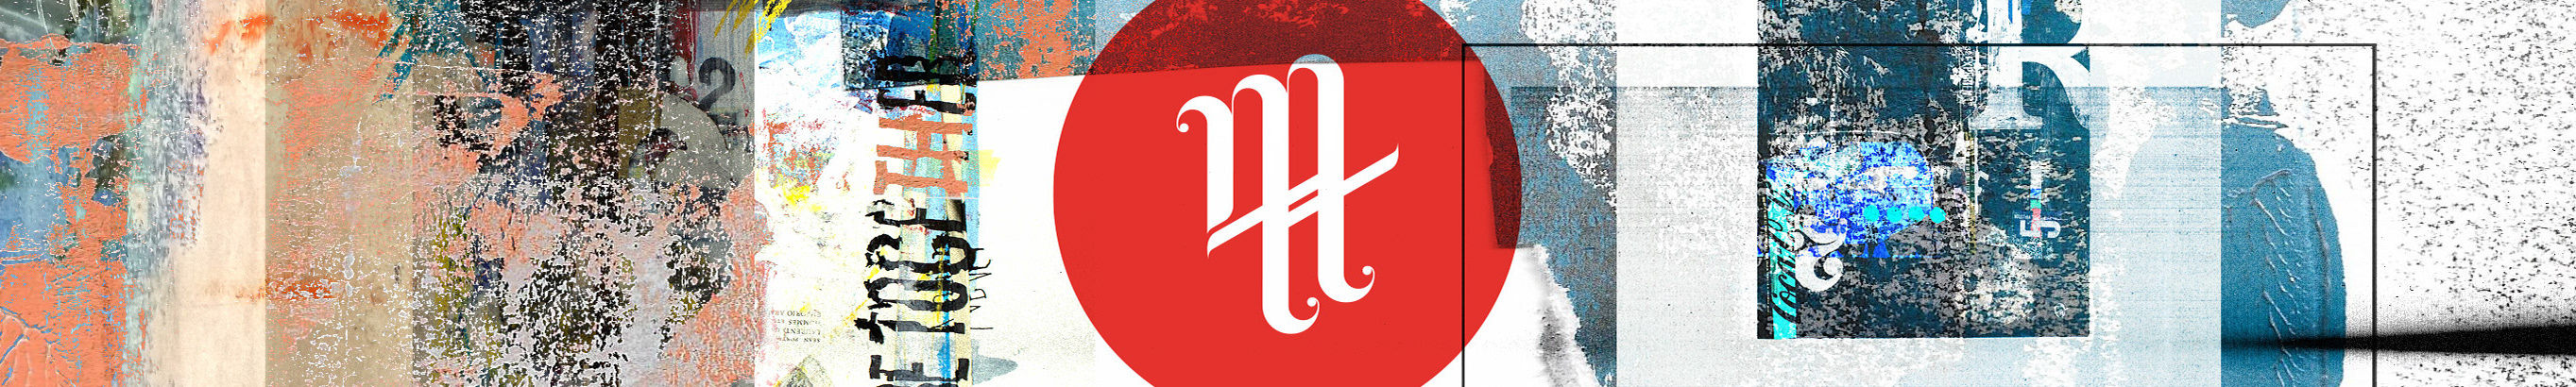 MARCIO HIROSSE's profile banner